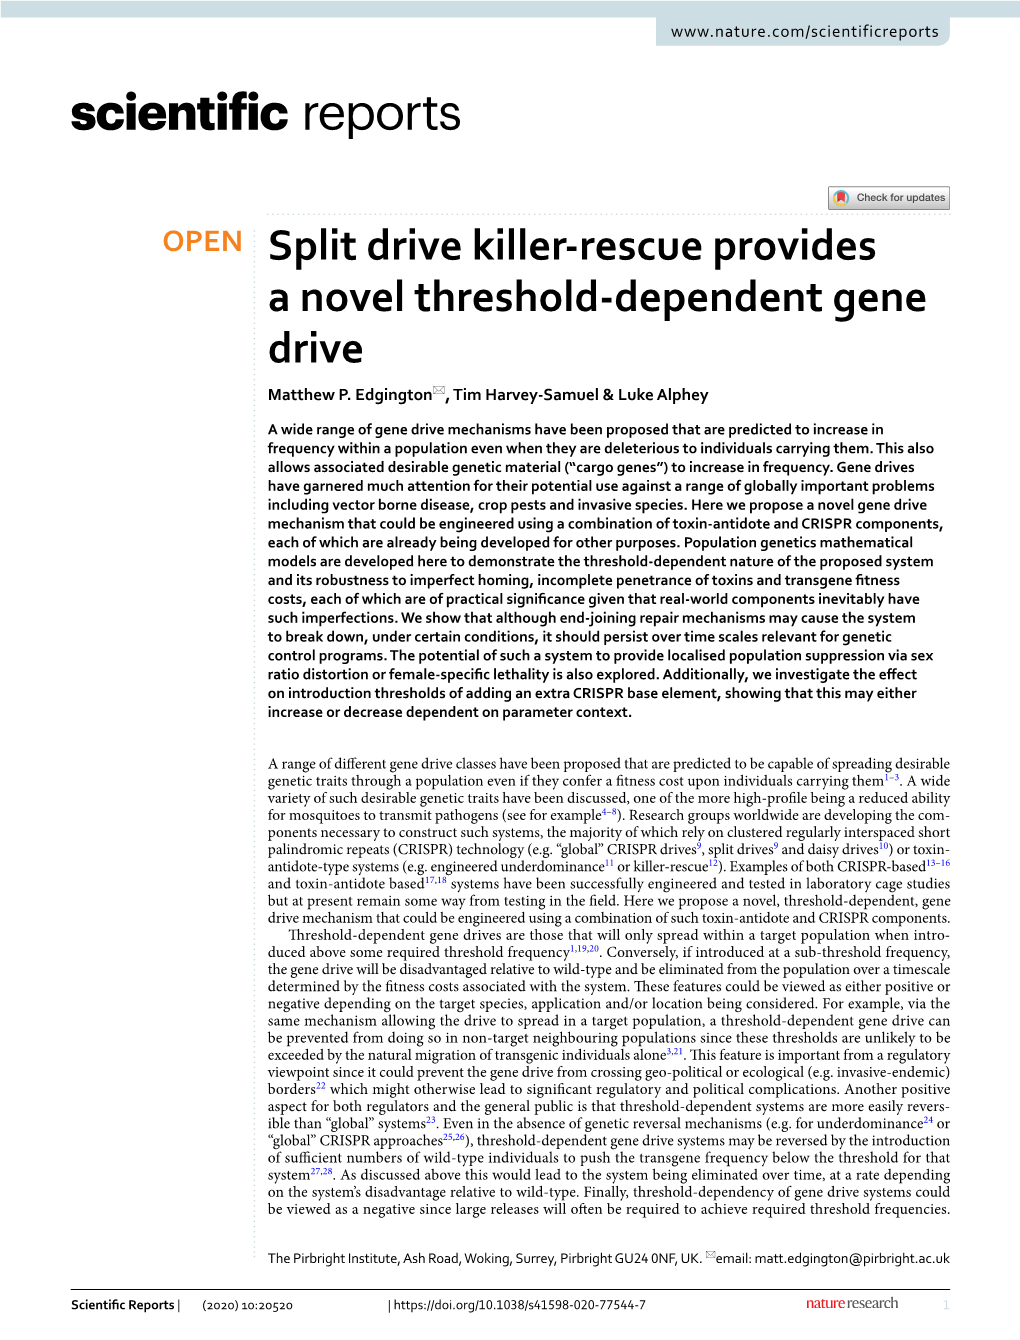 Split Drive Killer-Rescue Provides a Novel Threshold-Dependent Gene